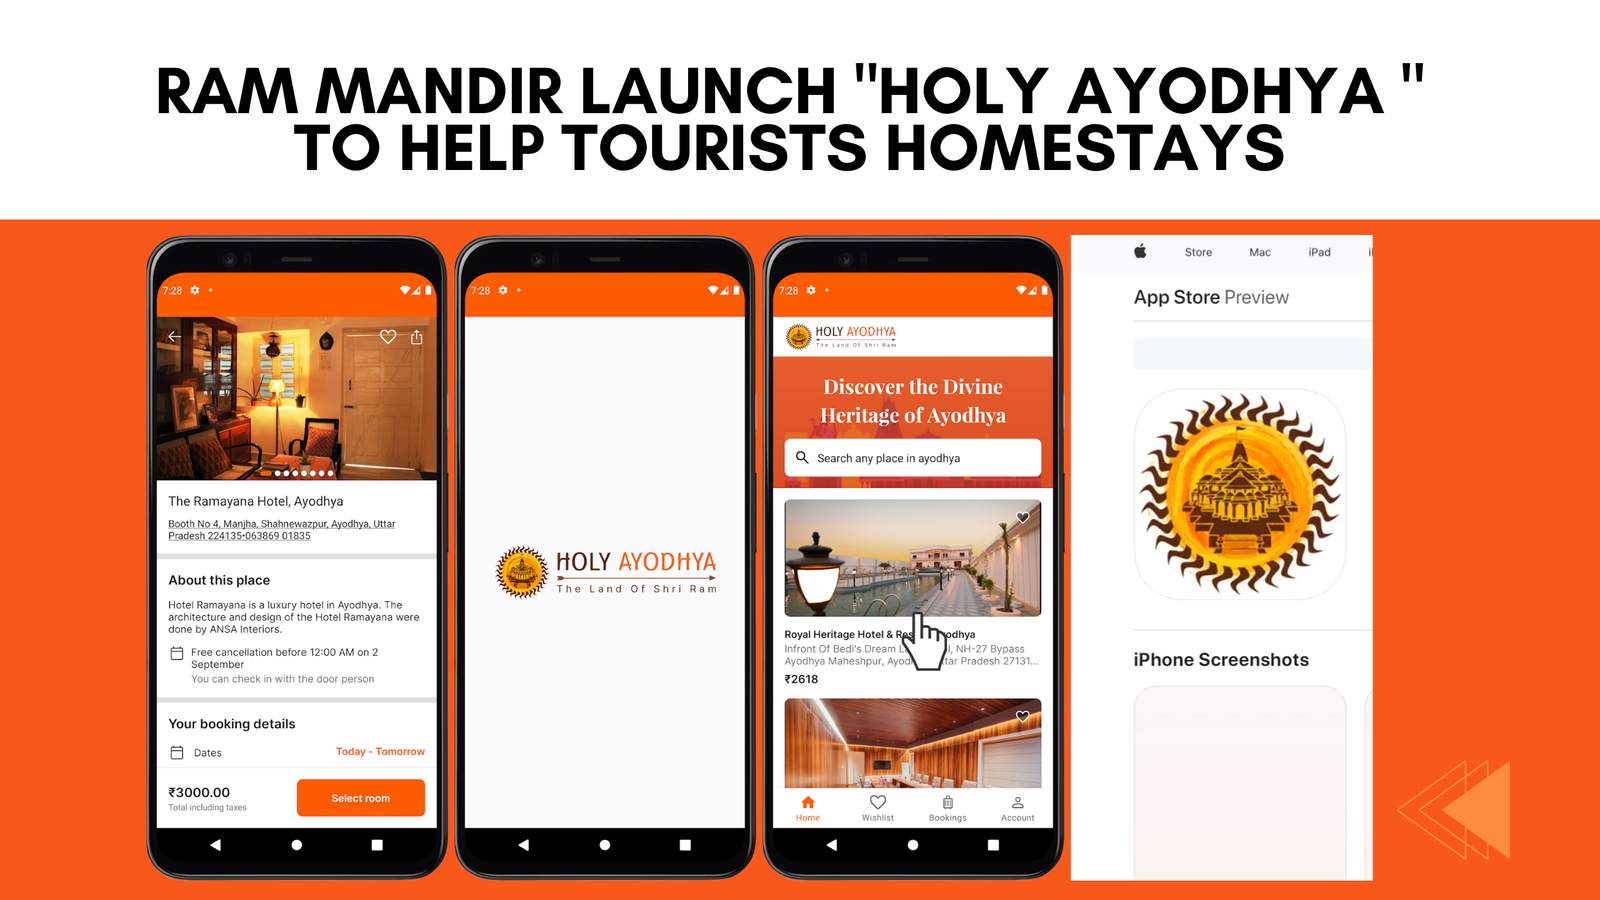 Ram Mandir launch "Holy Ayodhya " to help tourists Homestays